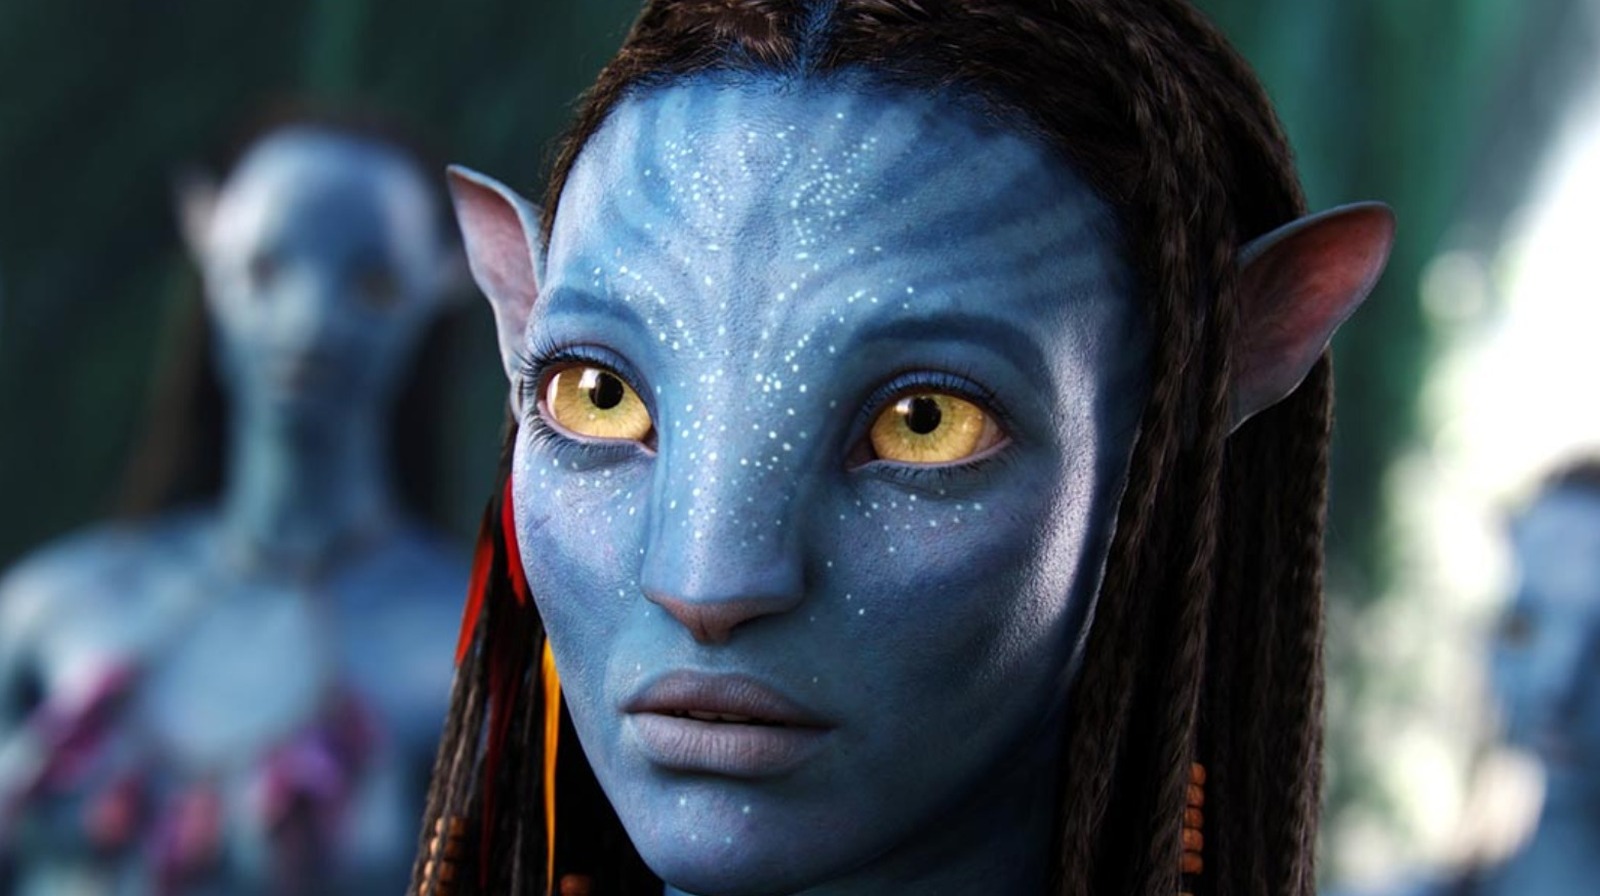  James Camerons Avatar  The Movie  All Cutscenes Full Walkthrough HD   YouTube